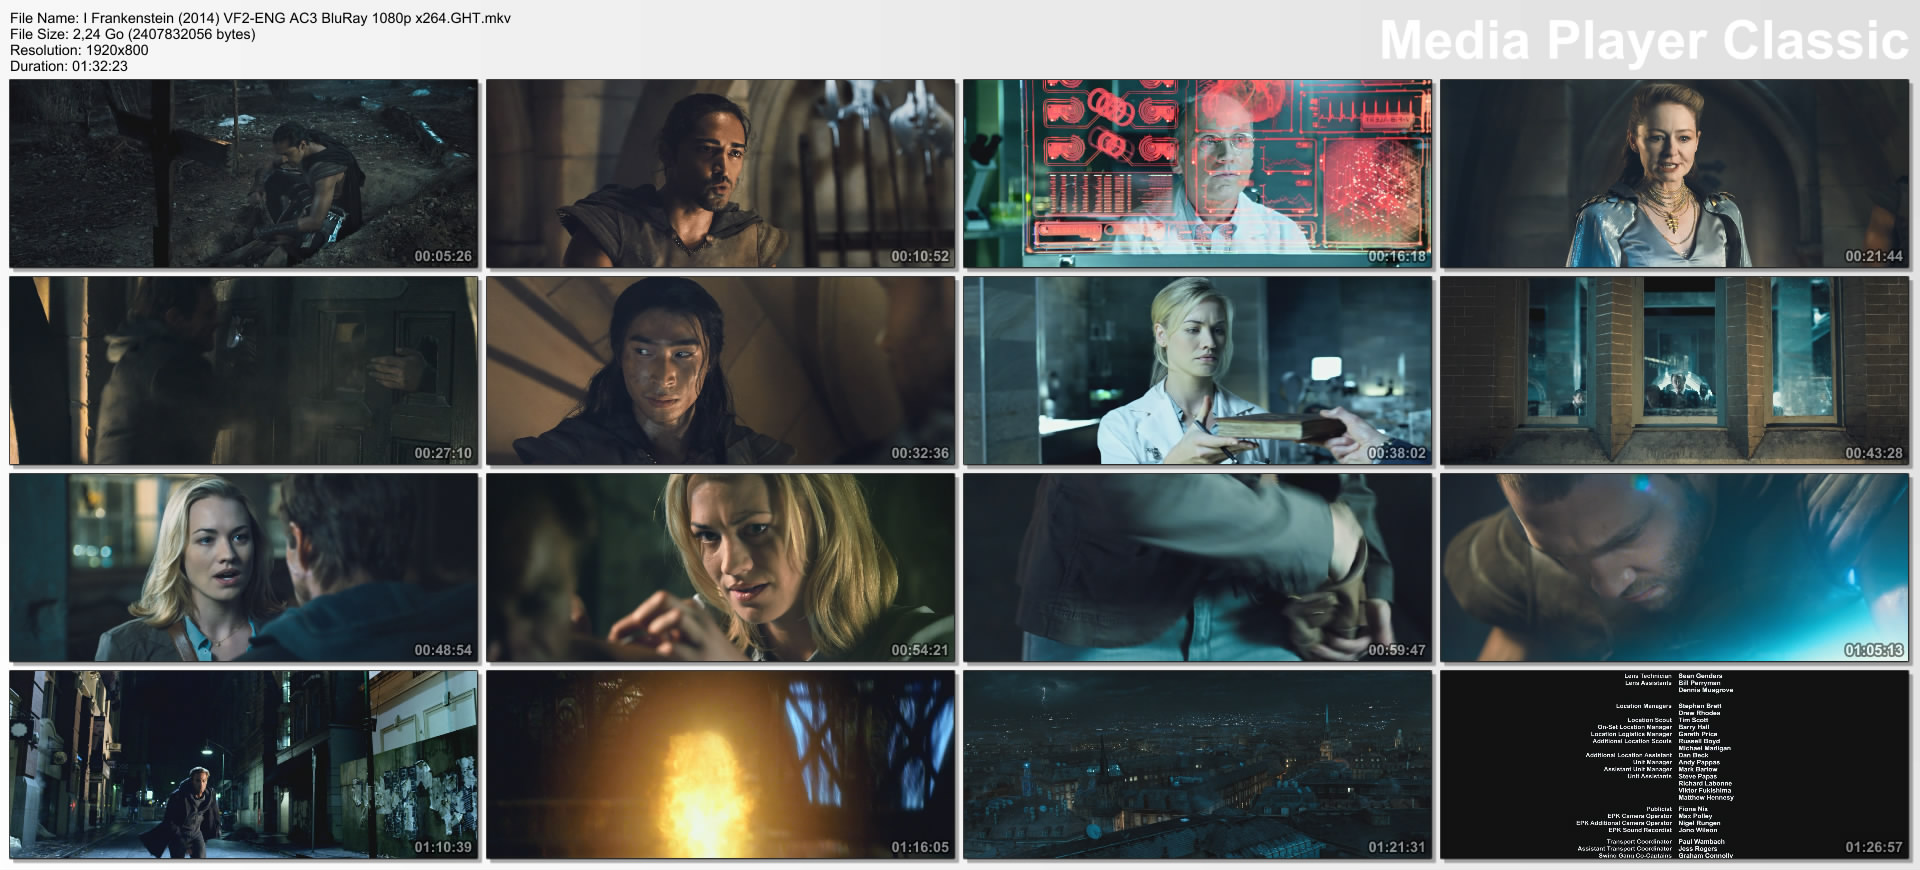 I Frankenstein (2014) VF2-ENG AC3 BluRay 1080p x264.GHT